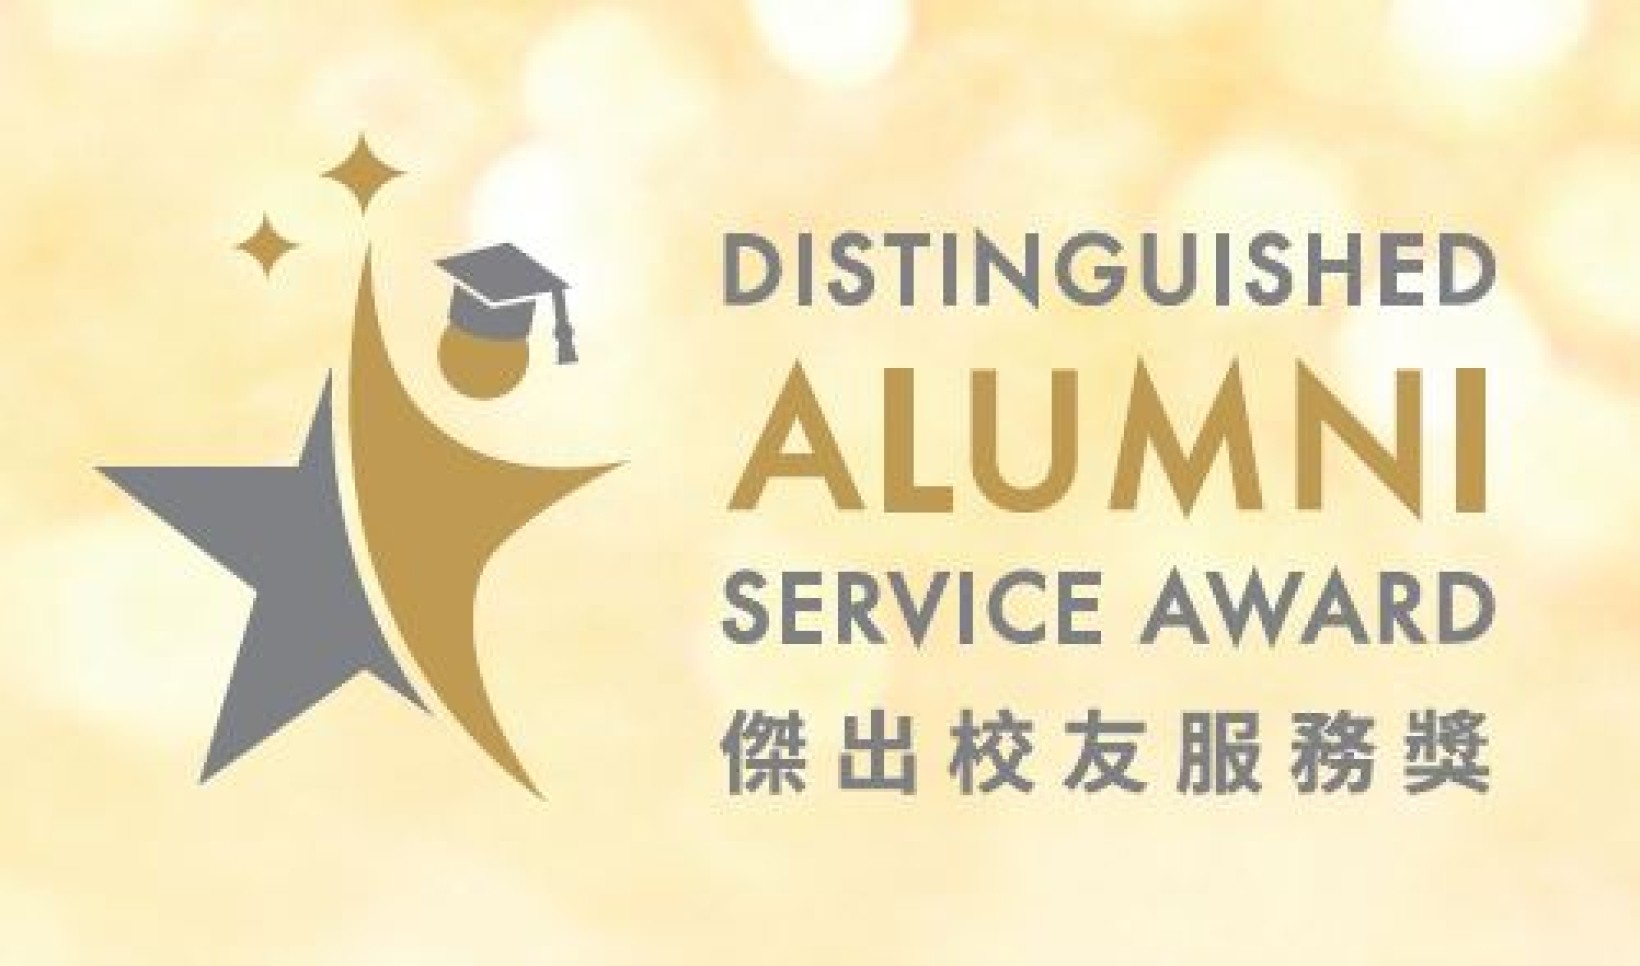  Distinguished Alumni Service Award